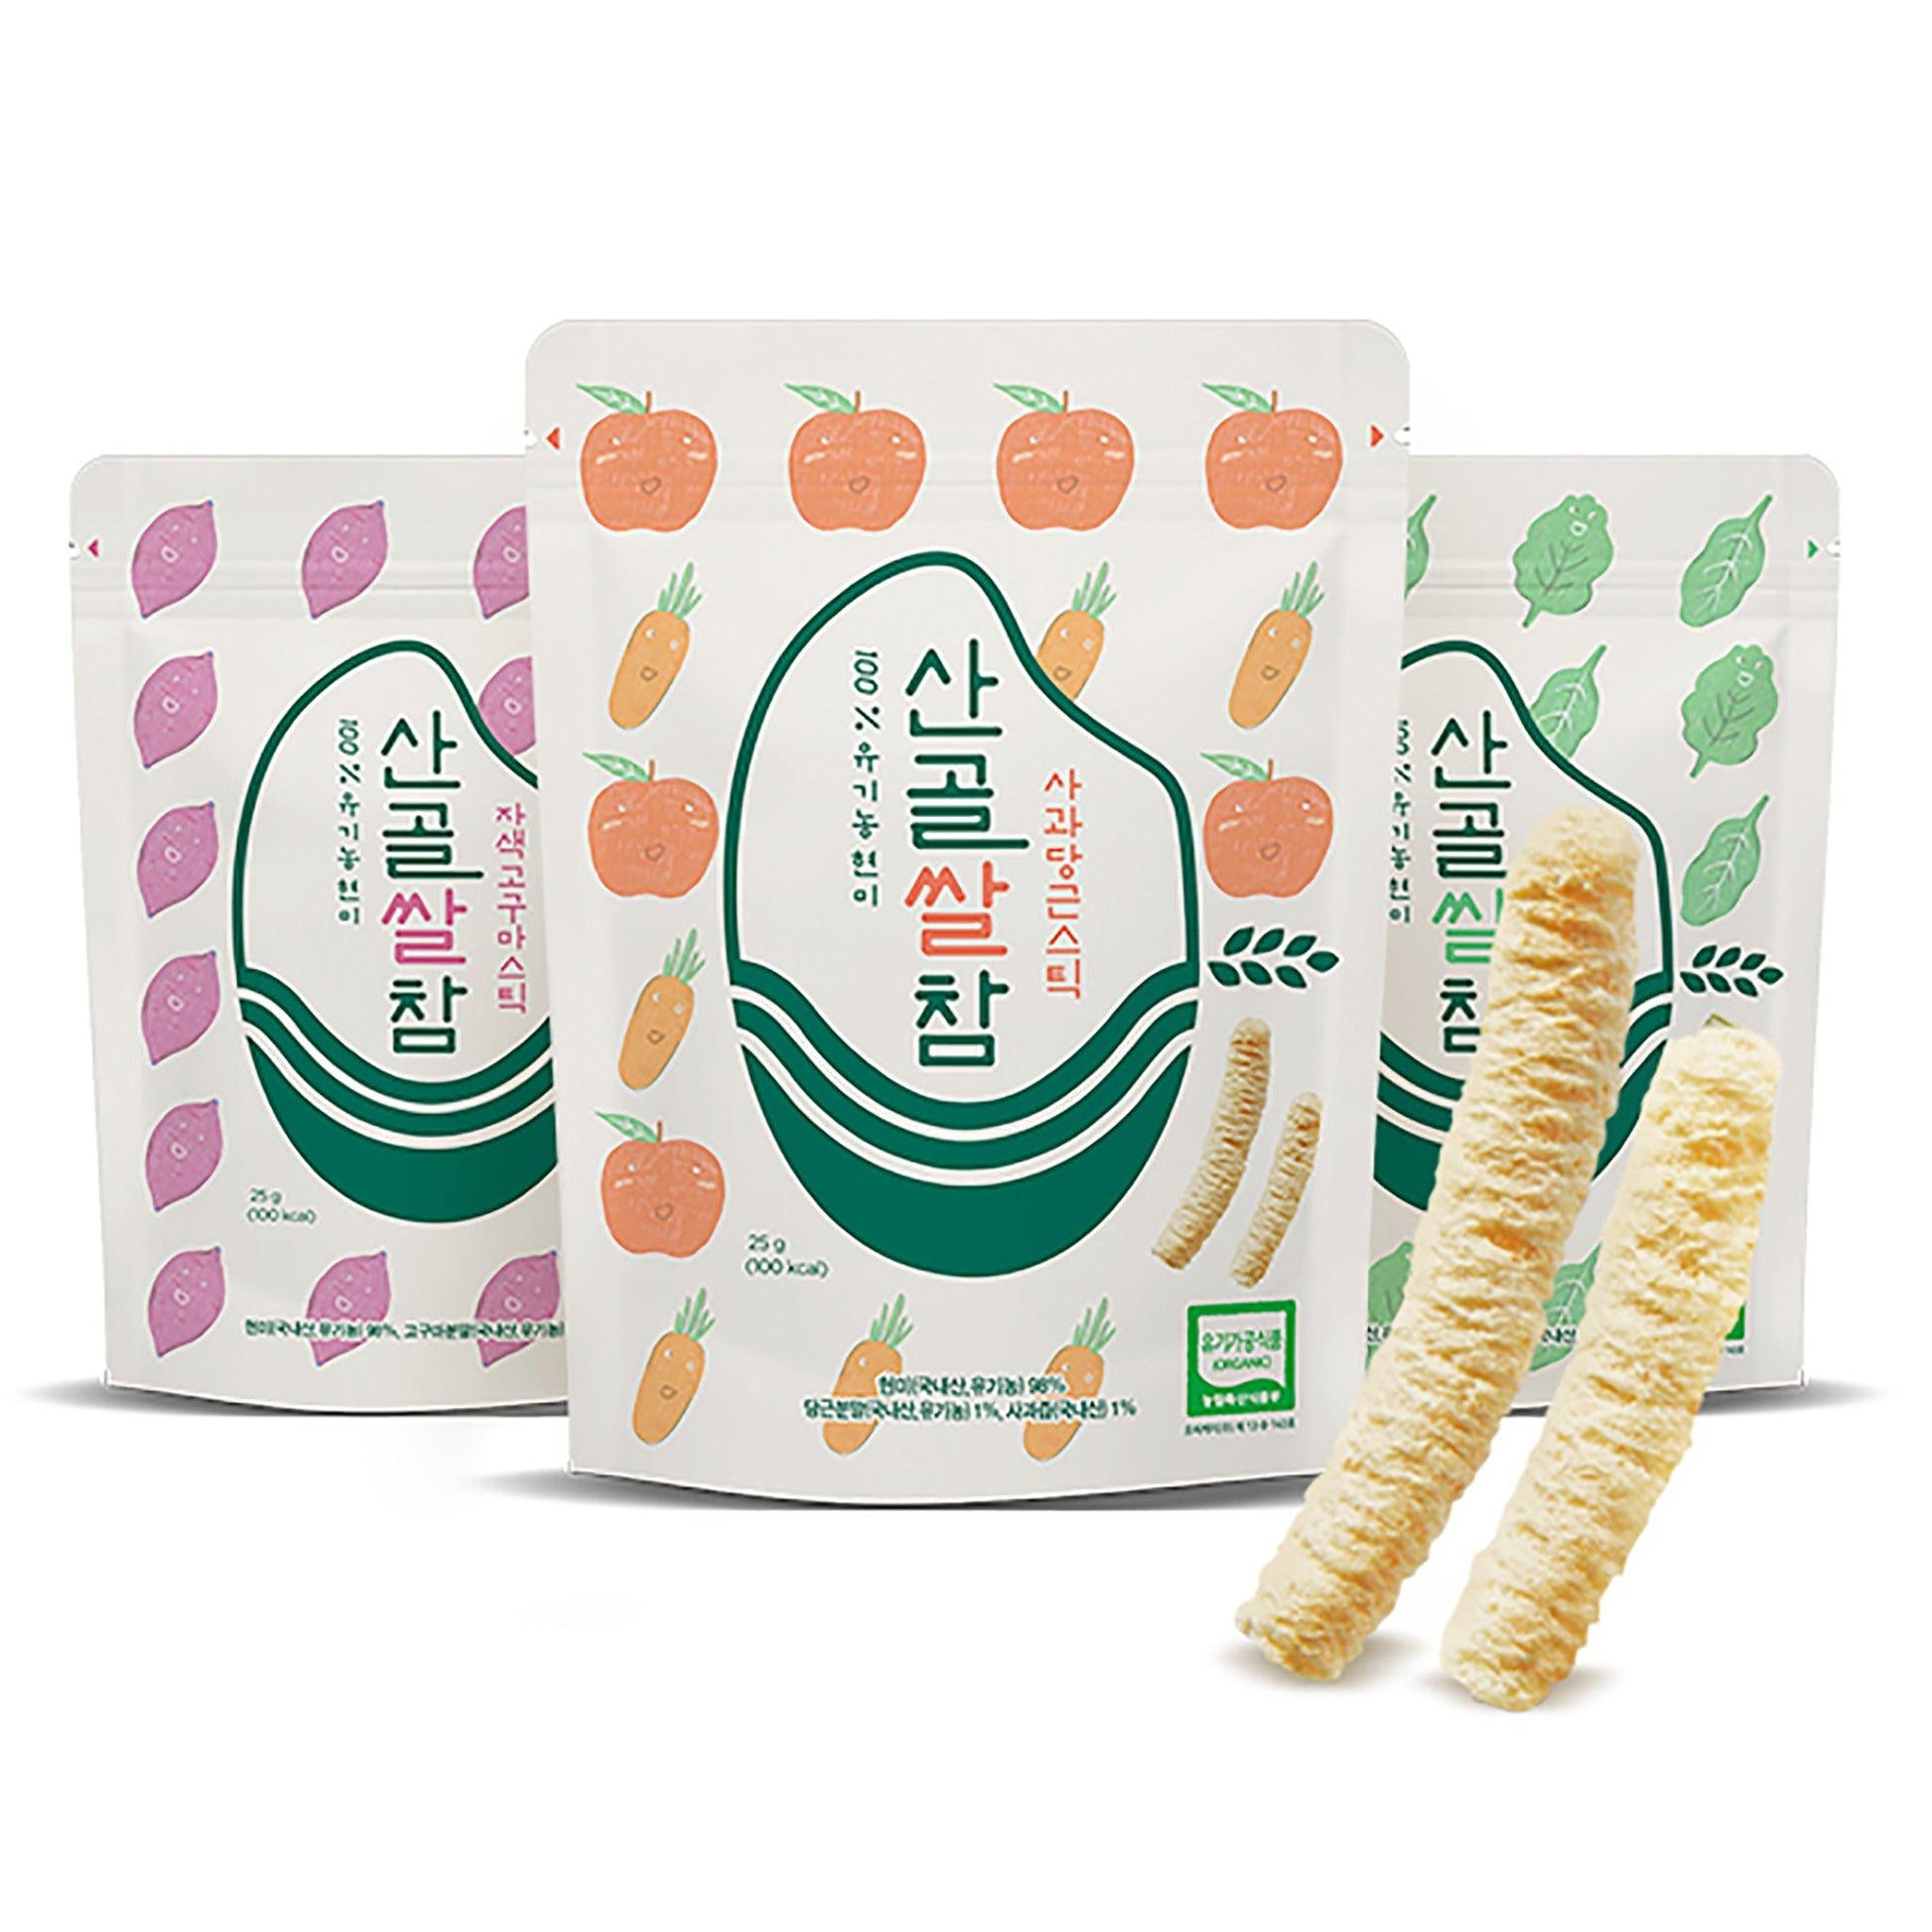 Organic Rice Sticks (Pack of 3) - Kim'C Market